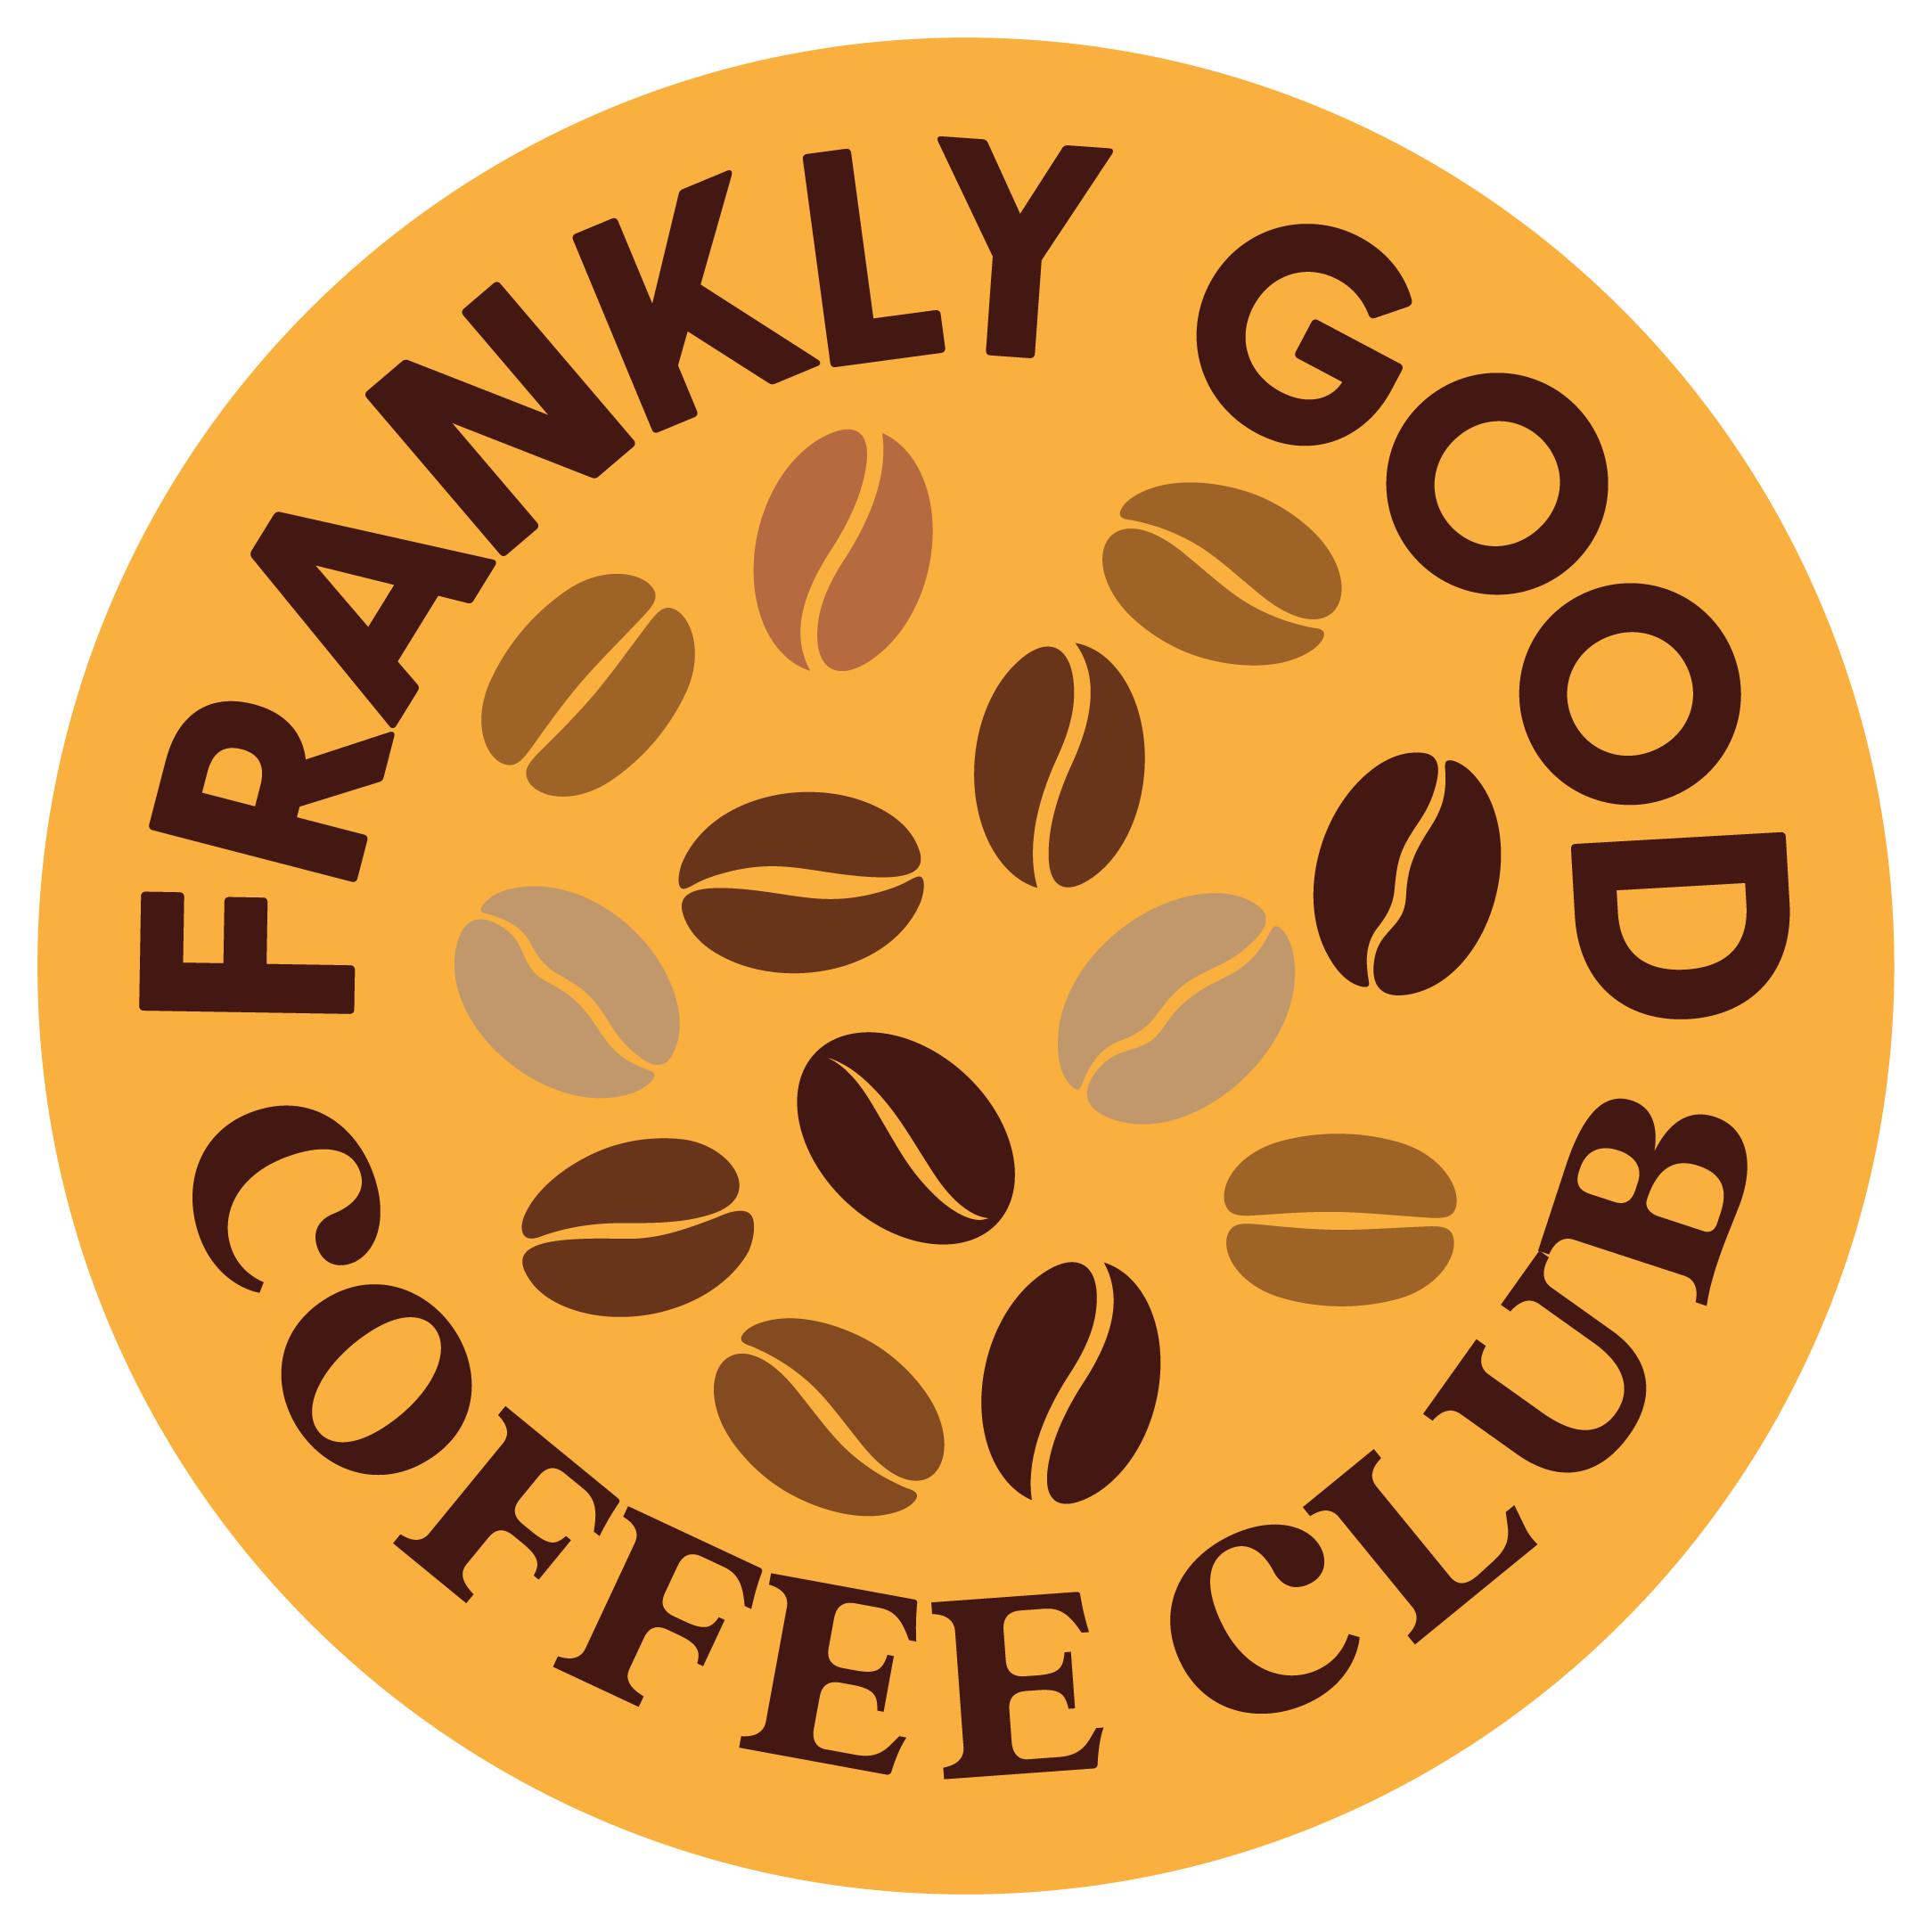 frankly-good-coffee-rgb-coffee-club-badge-2high-res.png